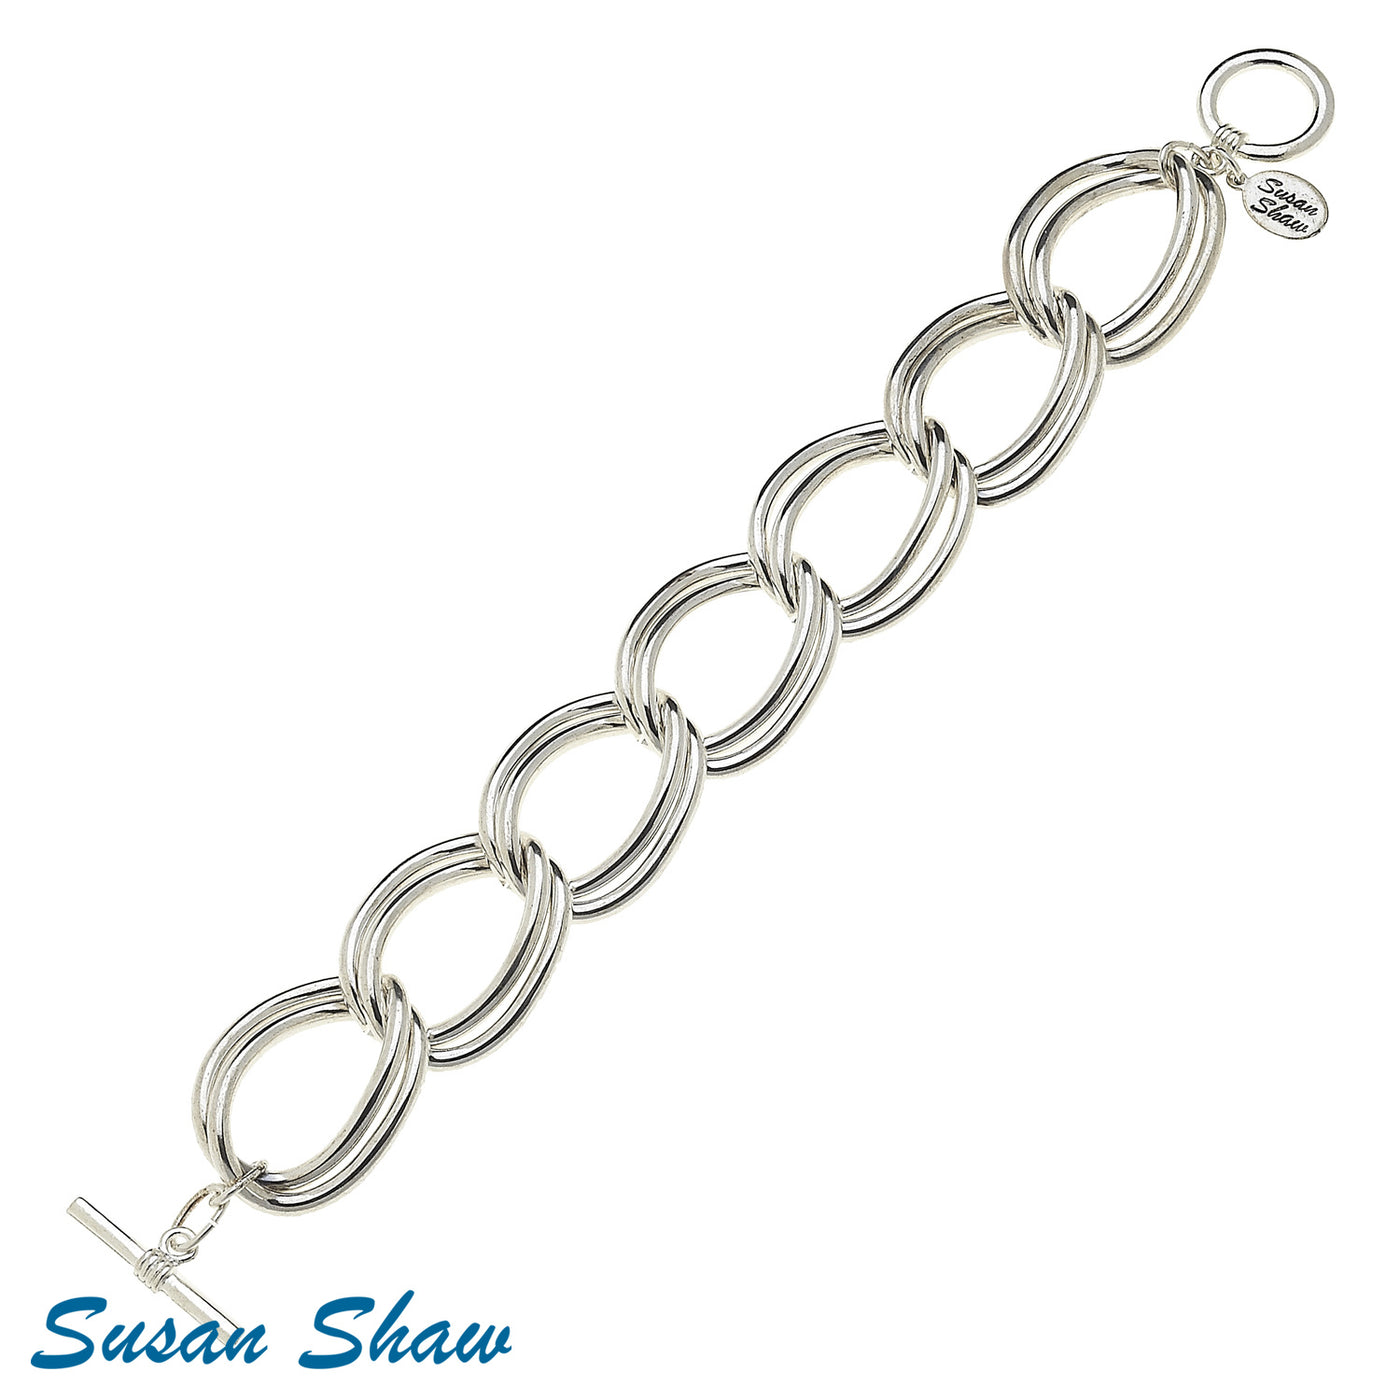 Smooth Silver Chain Bracelet - Susan Shaw